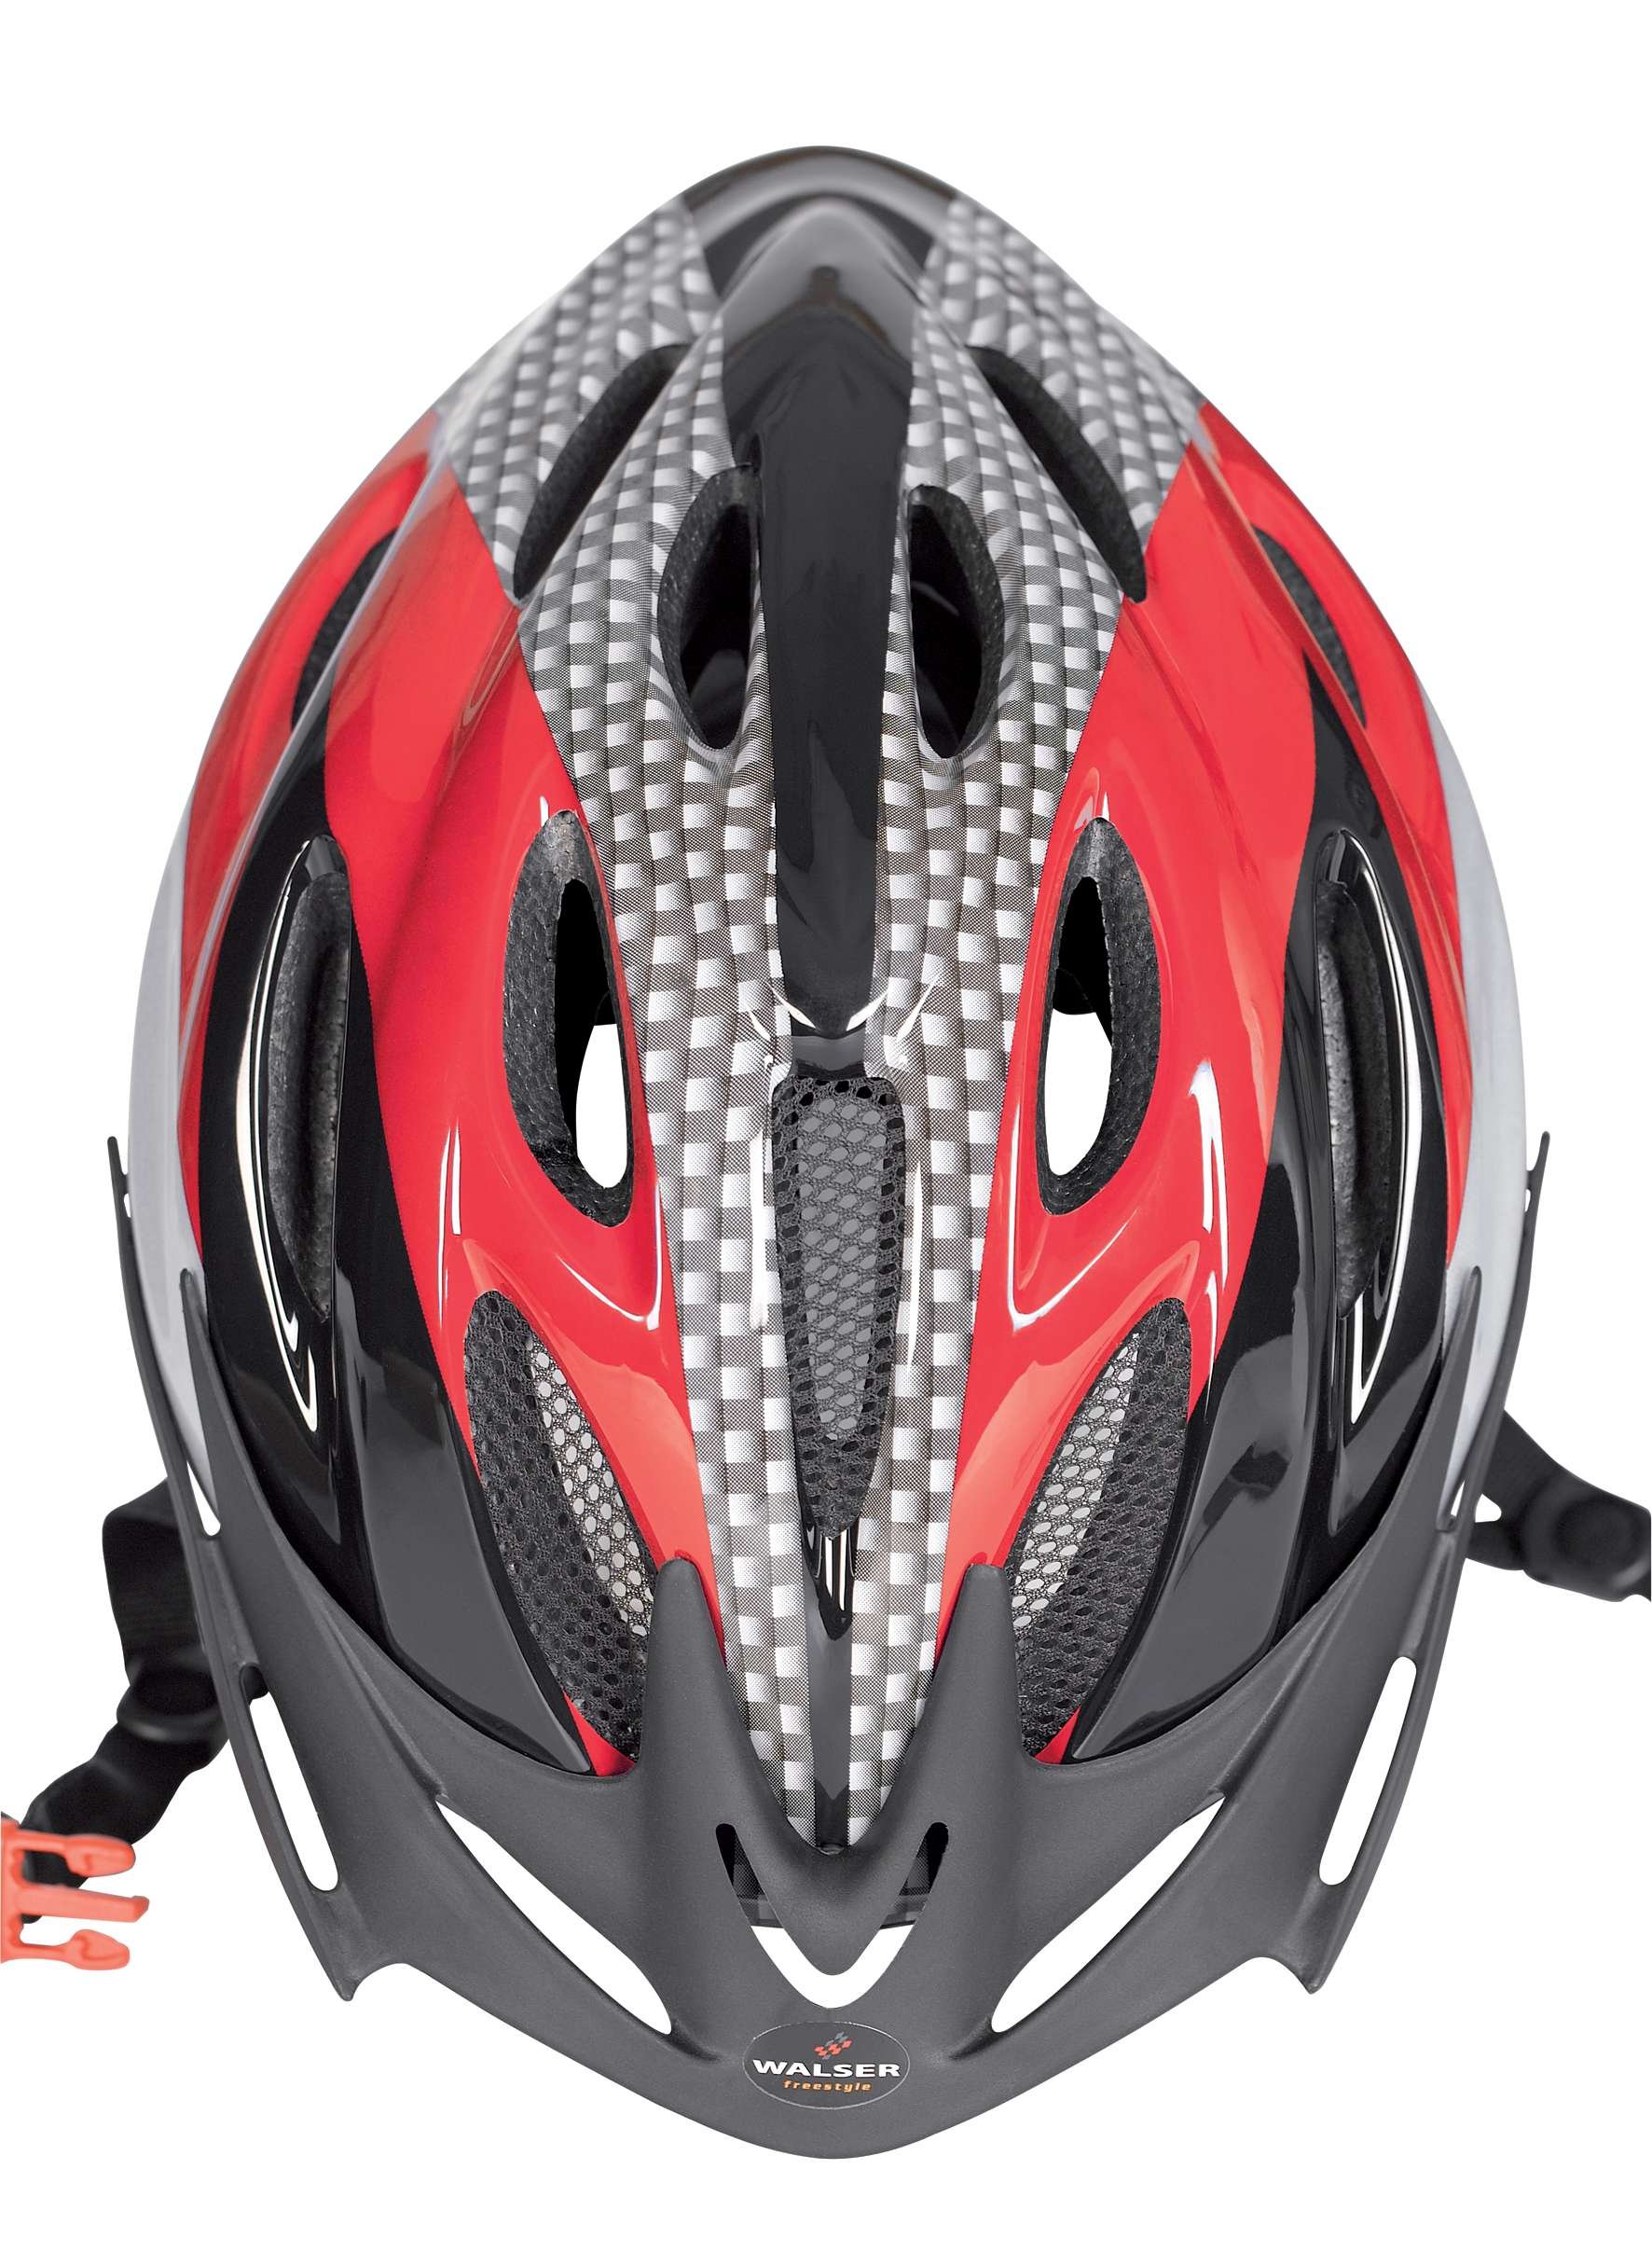 Cycling helmet 48-54 cm Sprinter NXTR red